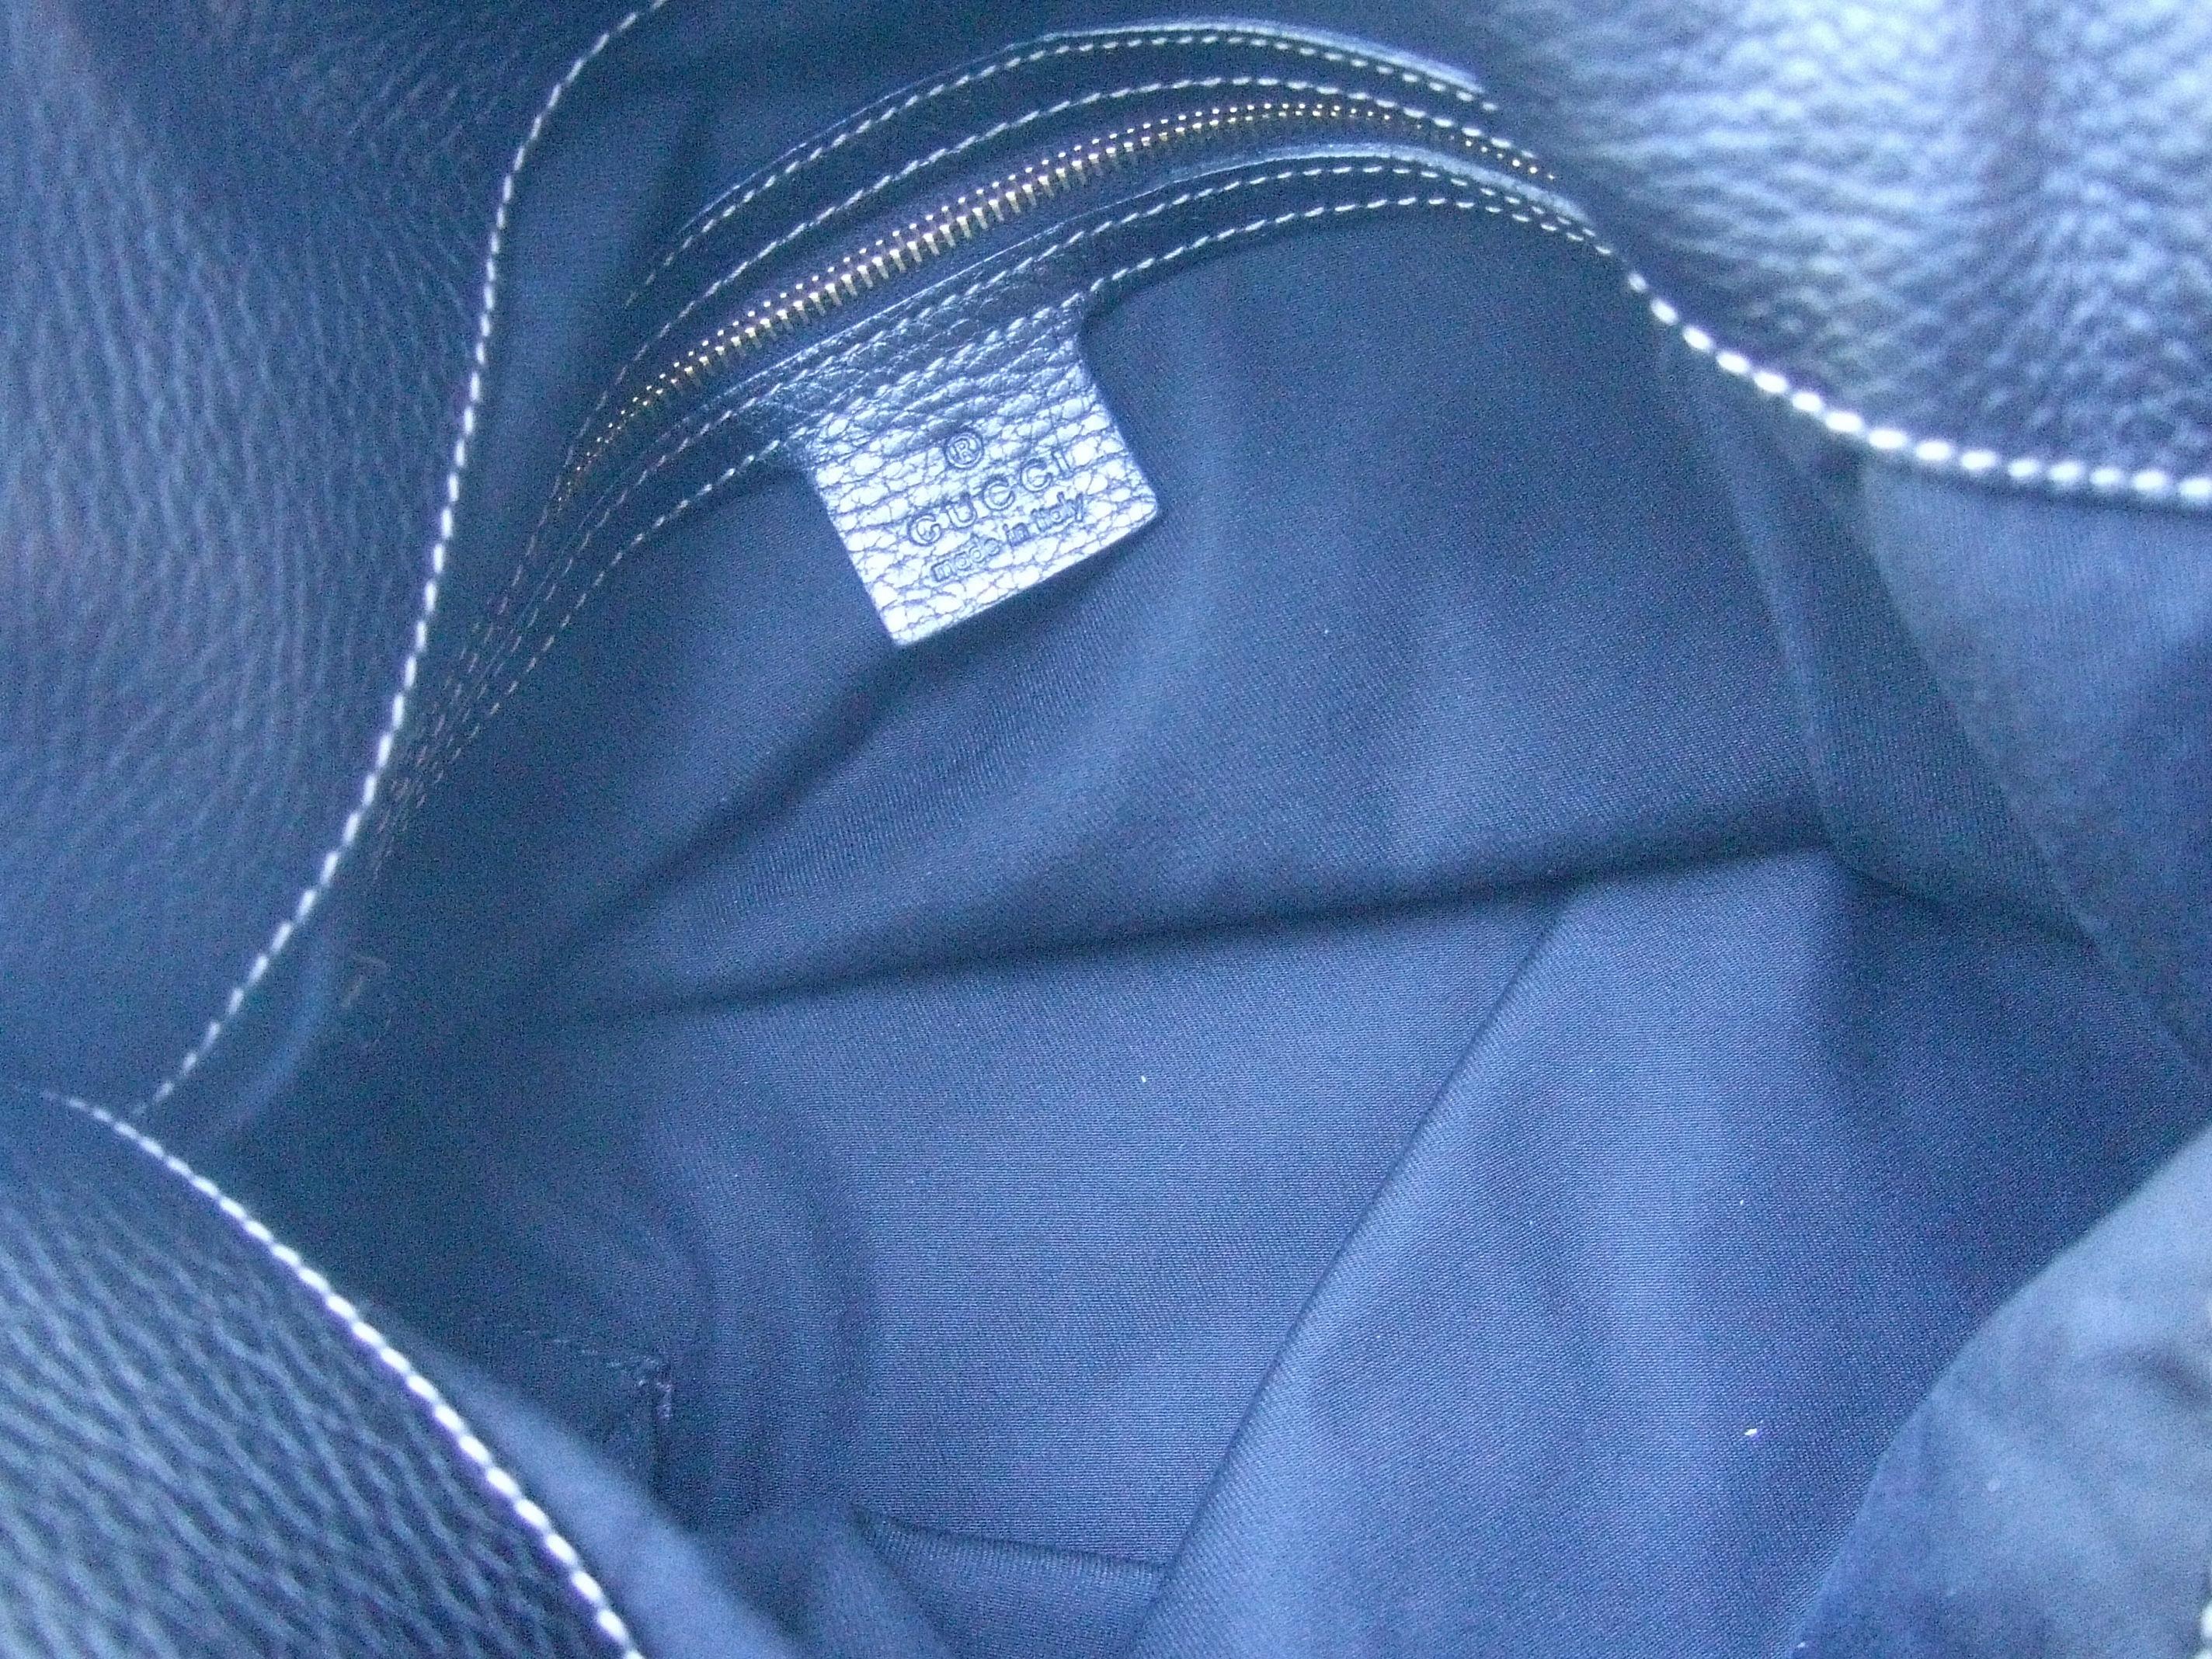 Gucci Italy Rare Embroidered Black Wool Large Handbag - Shoulder Bag c 1990s 14